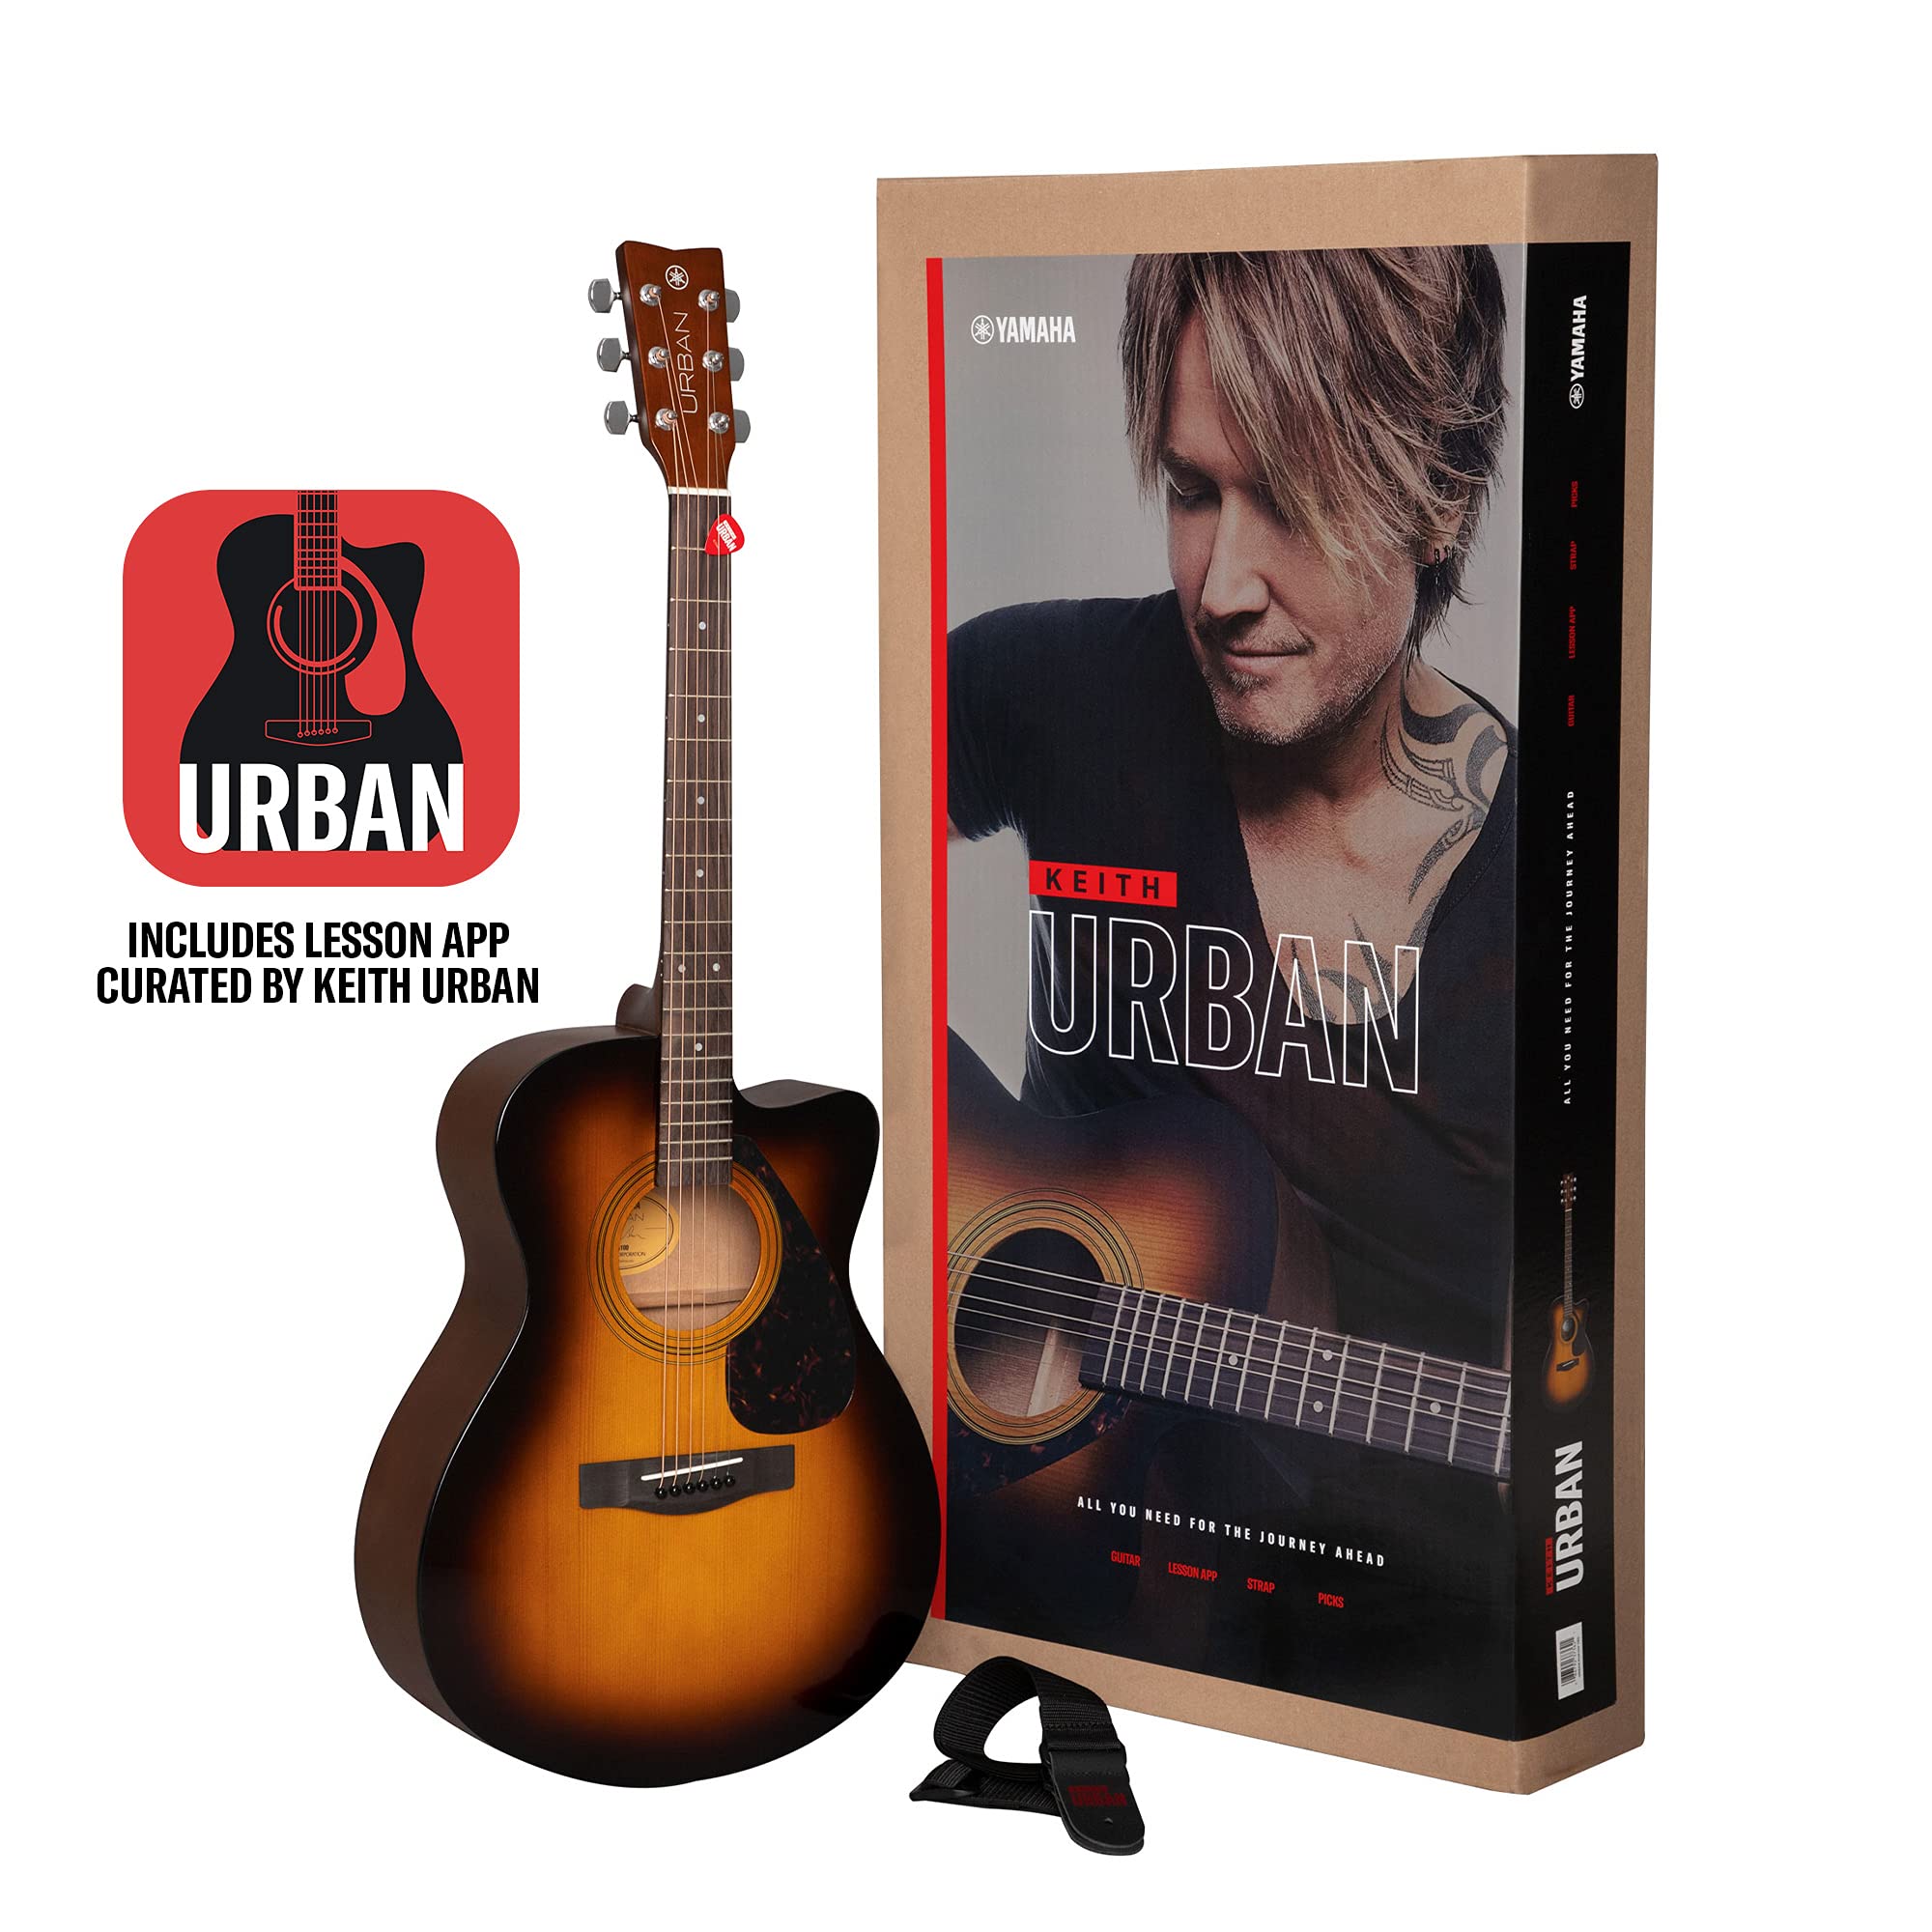 YAMAHA Learn Guitar withKeith Urban 推出的 URBAN Guitar - 吉他、应用程序和必备配件